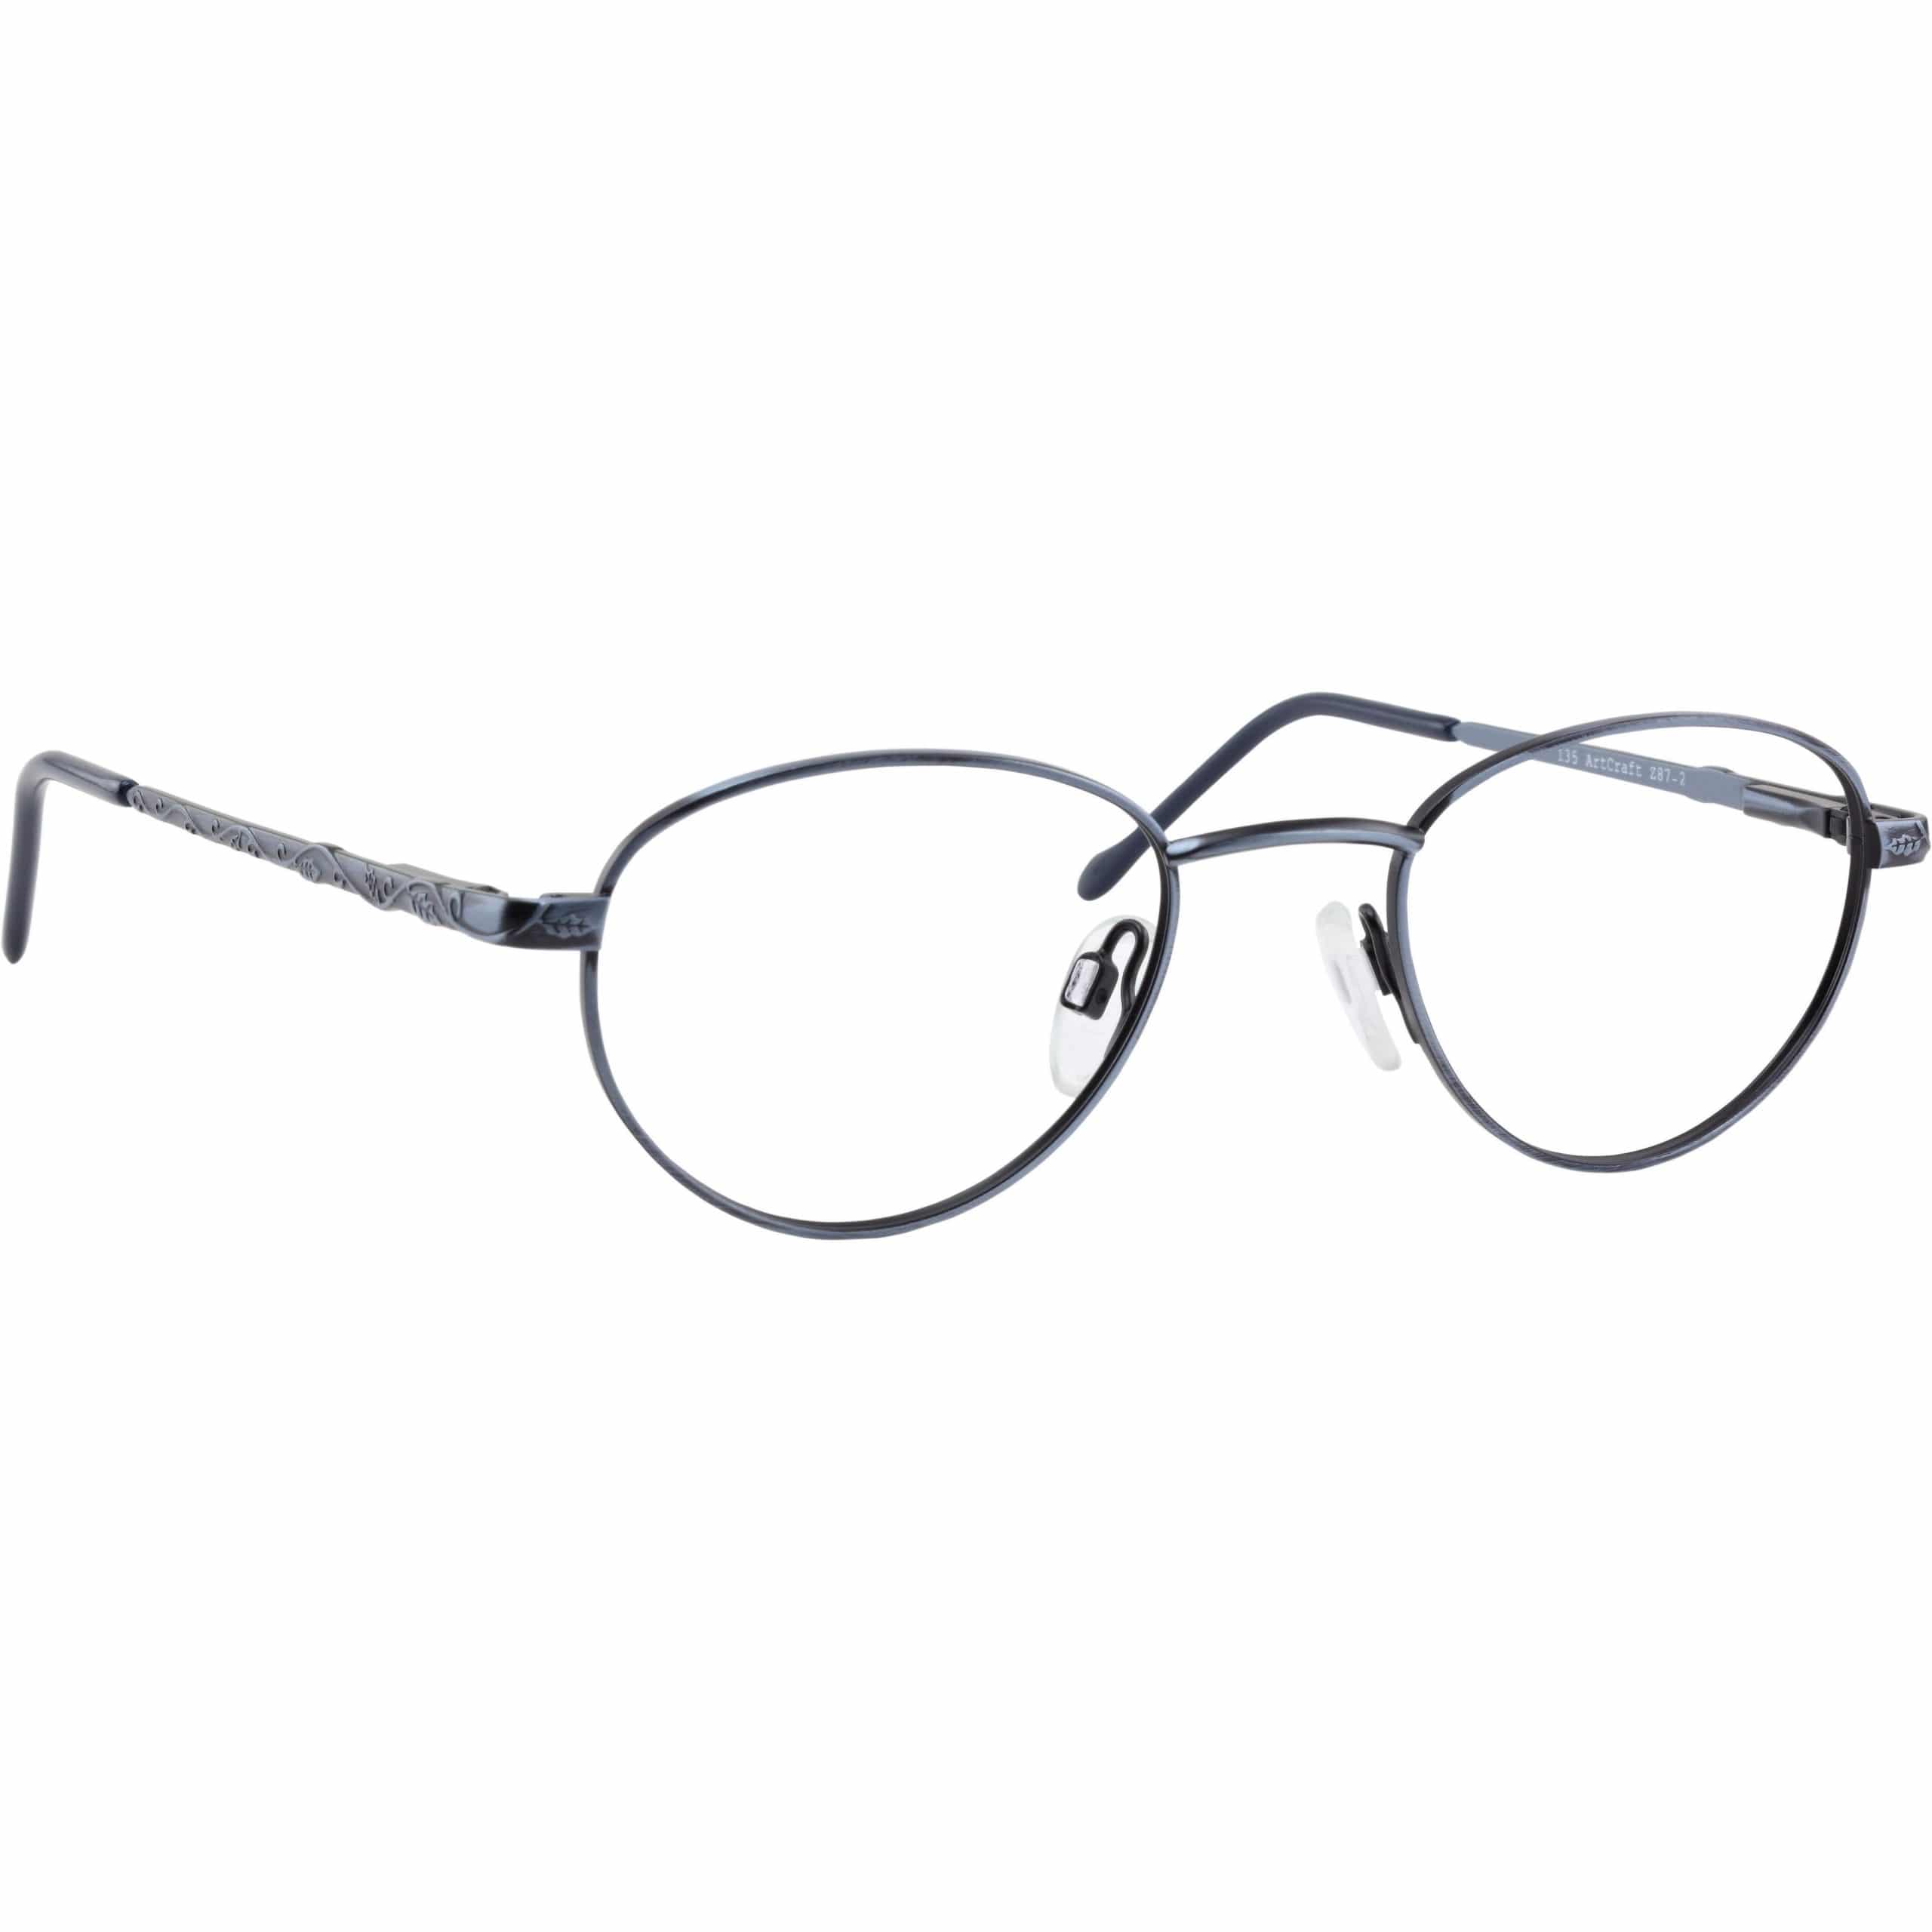 Art-Craft USA Workforce 829 Eyeglasses - Safety Protection Glasses